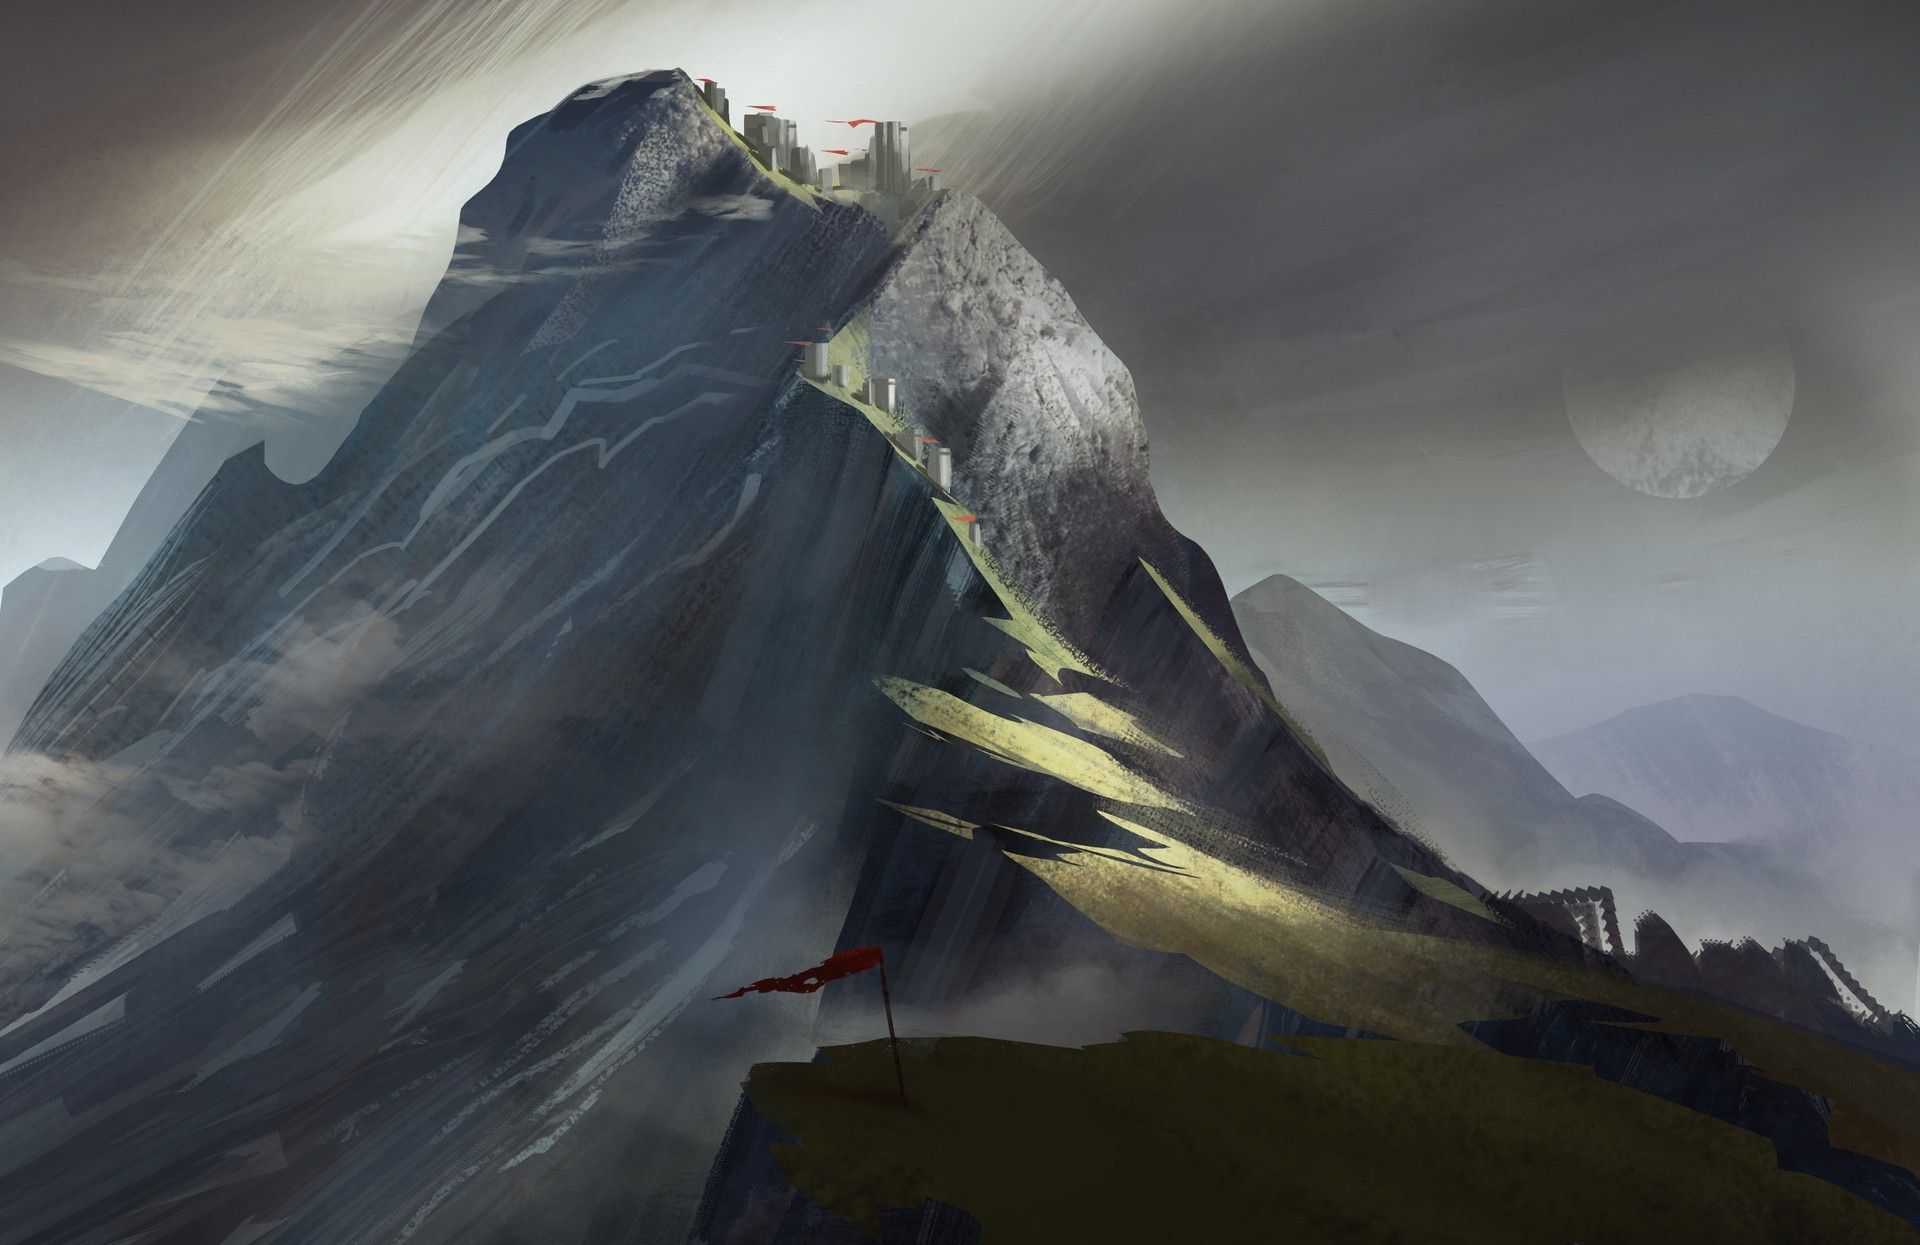 Cool Mountain Fantasy Art Wallpapers